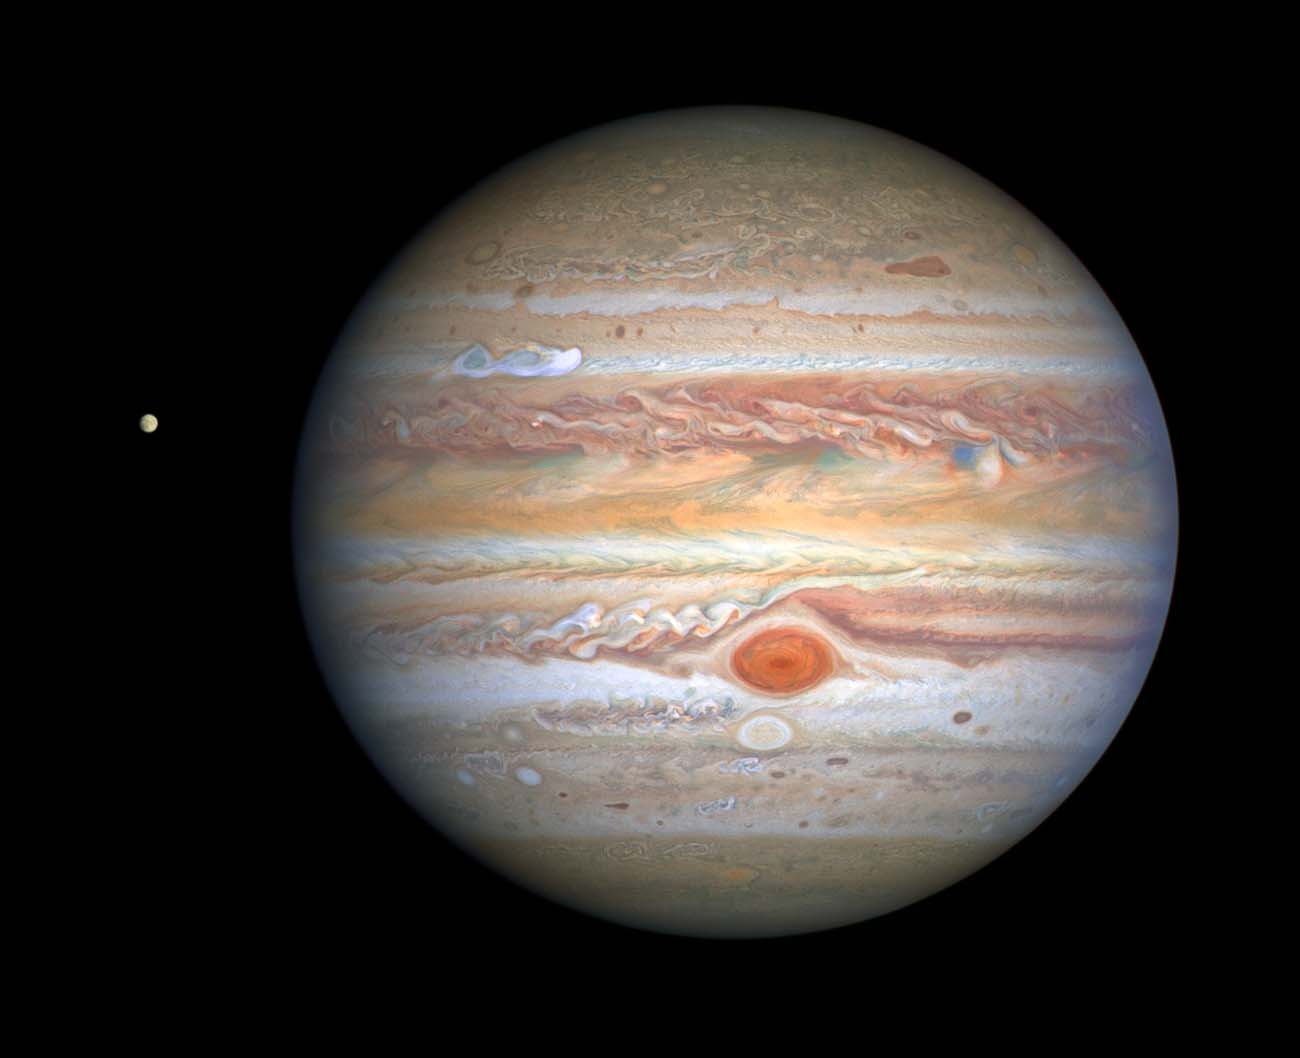 New crisp image of the planet Jupiter